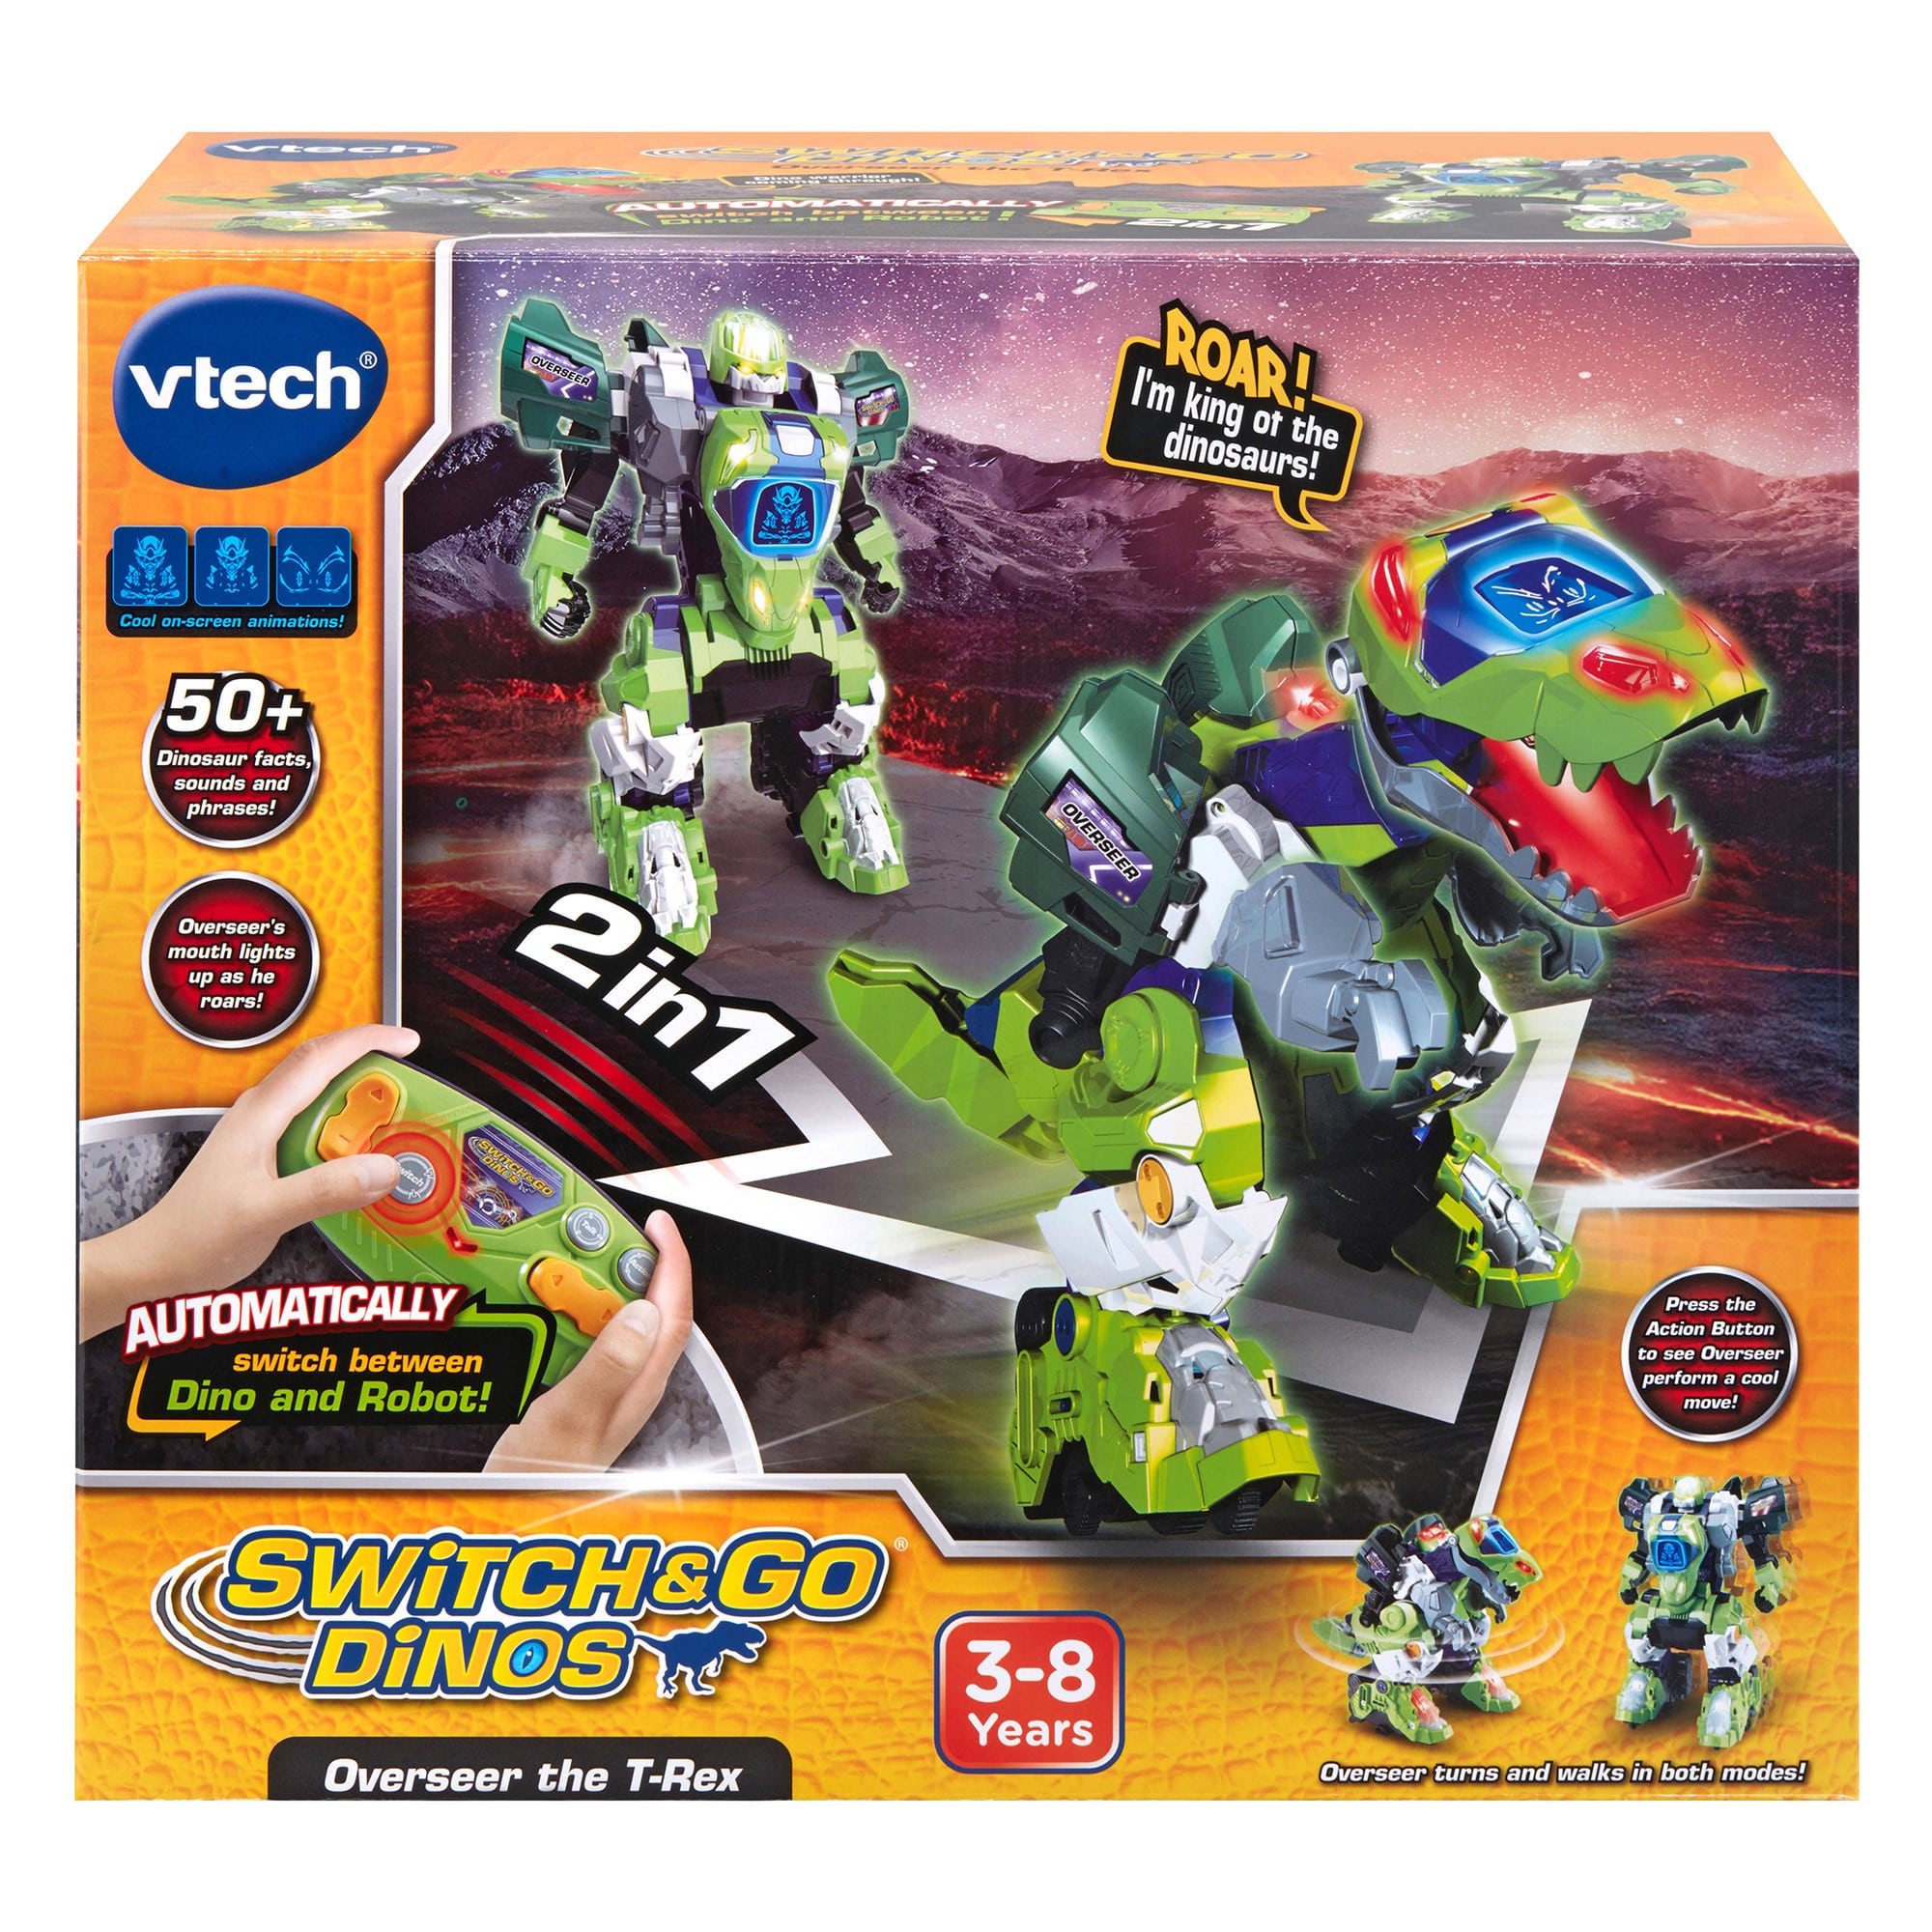 Vtech - Switch & Go Dinos - Overseer the T-Rex